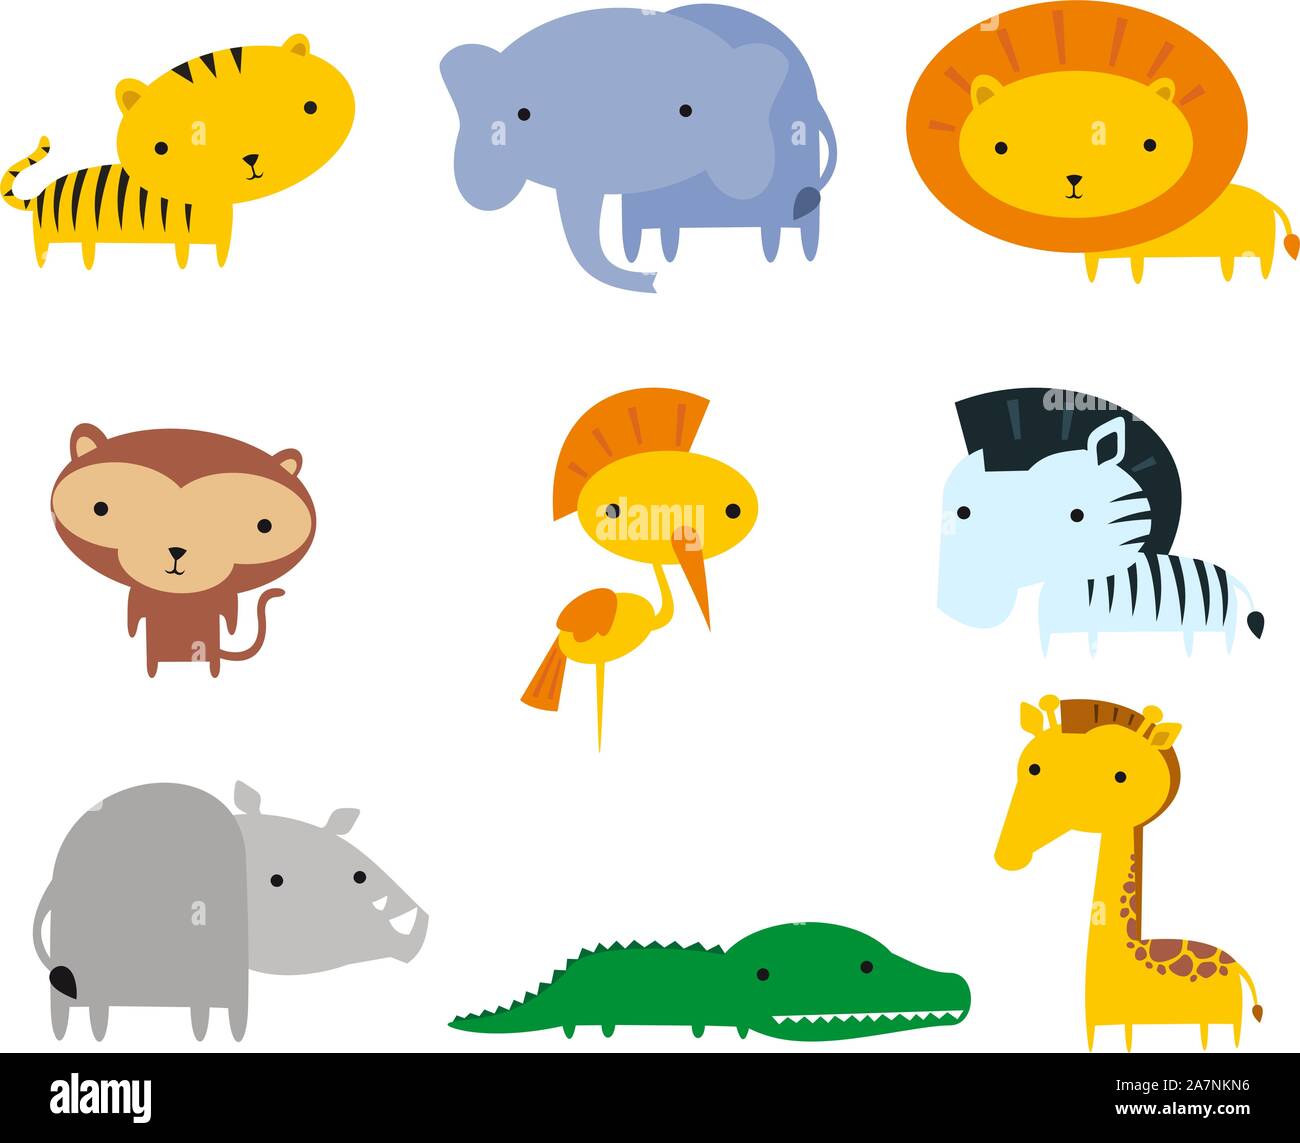 Dschungel Tiere Themen Icon-Set, mit Tiger, Elefant, Löwe, Affe, Zebra, Flusspferd, Krokodil und Giraffe-Vektor-Illustration. Stock Vektor